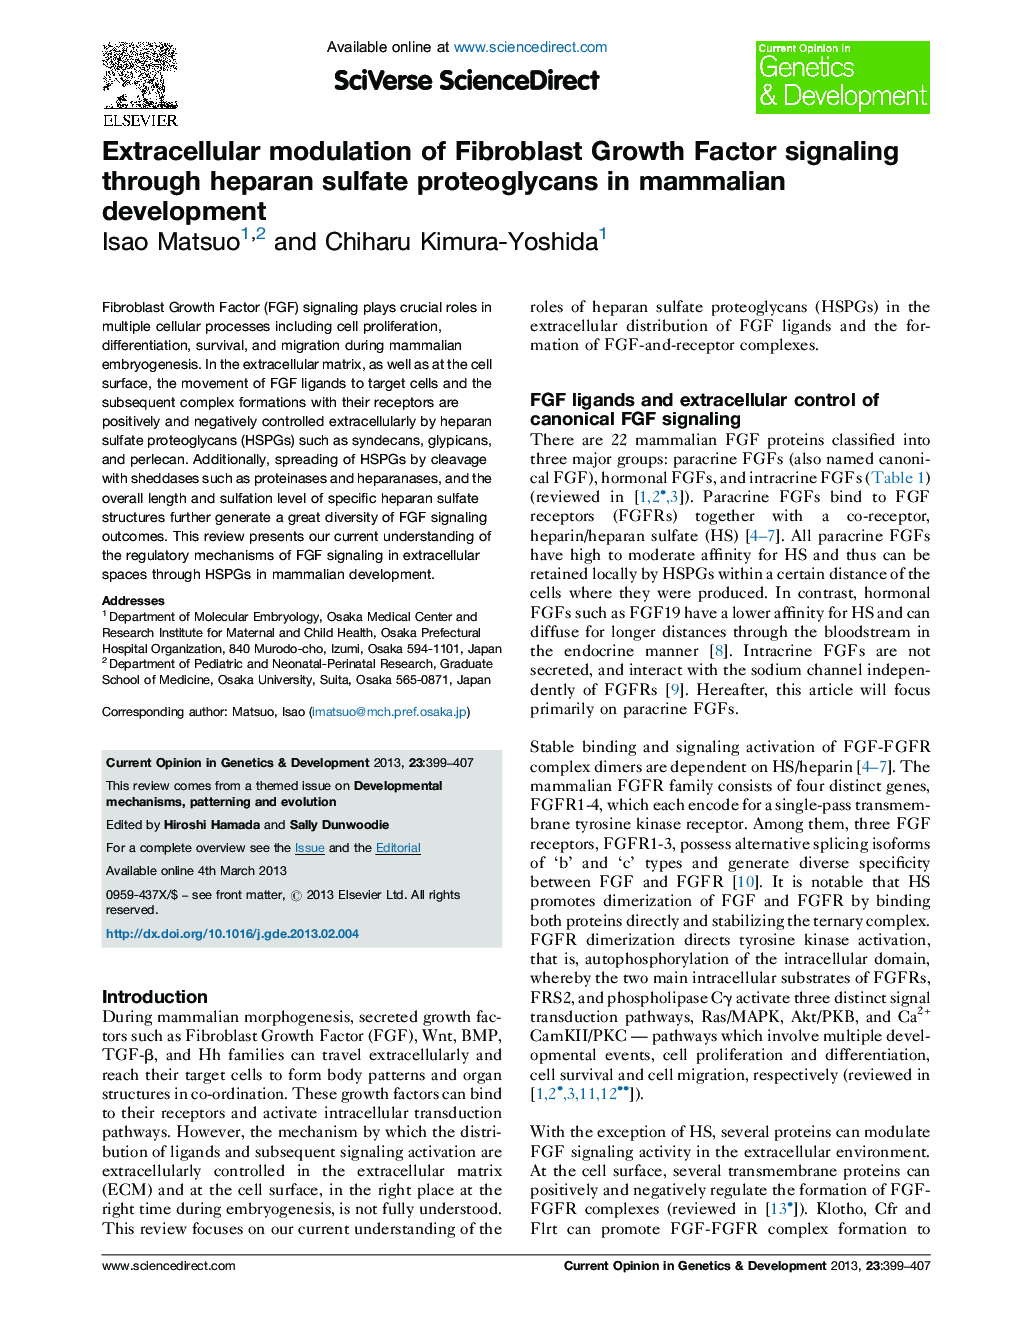 Extracellular modulation of Fibroblast Growth Factor signaling through heparan sulfate proteoglycans in mammalian development